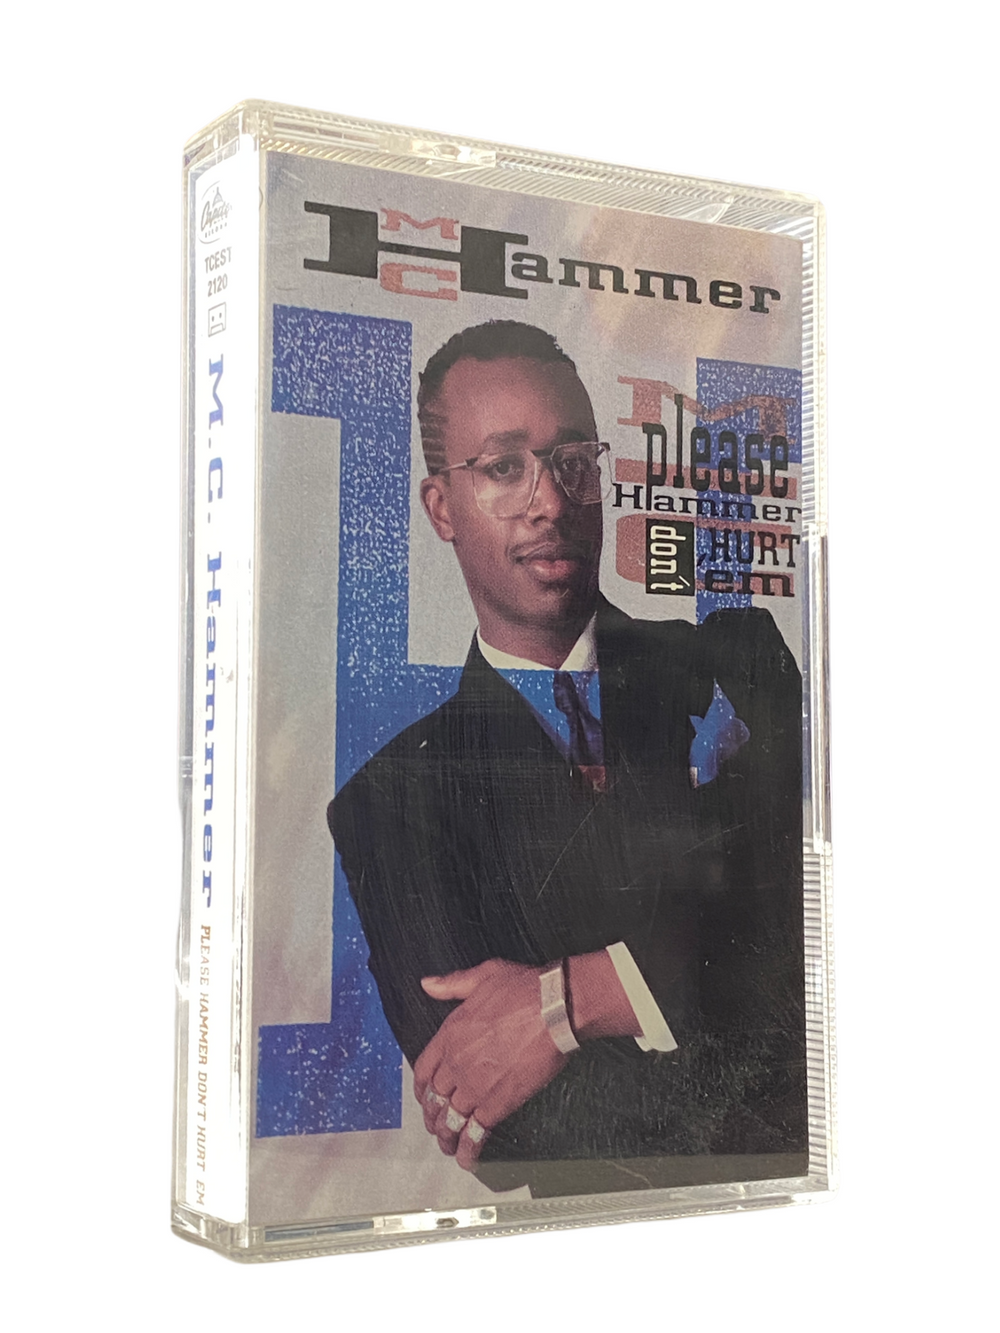 Prince – MC Hammer Don't Hurt Em Original Cassette Tape UK 1990 Release Prince